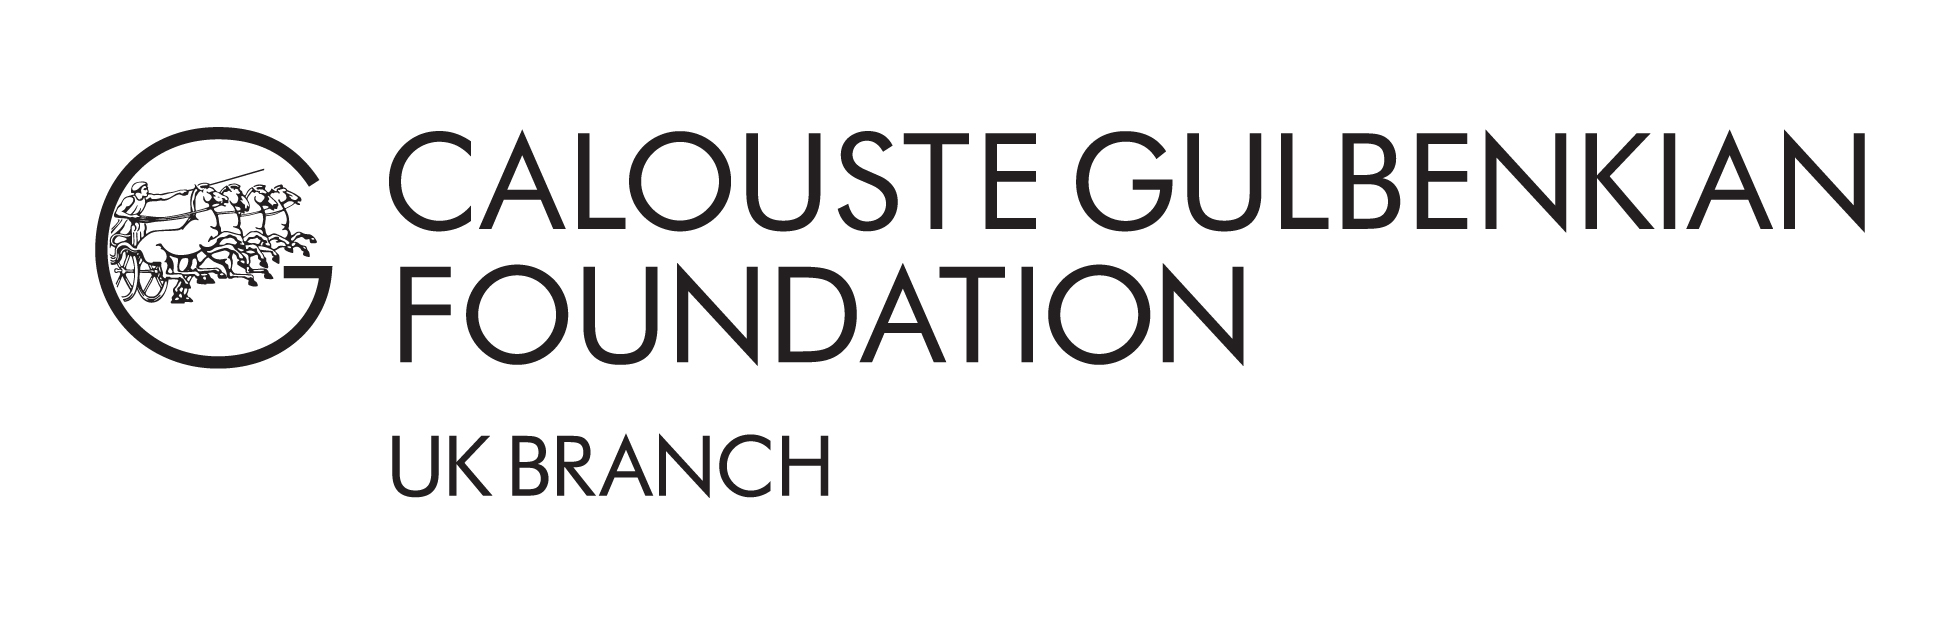 Calouste Gulbenkian Foundation (UK Branch) logo